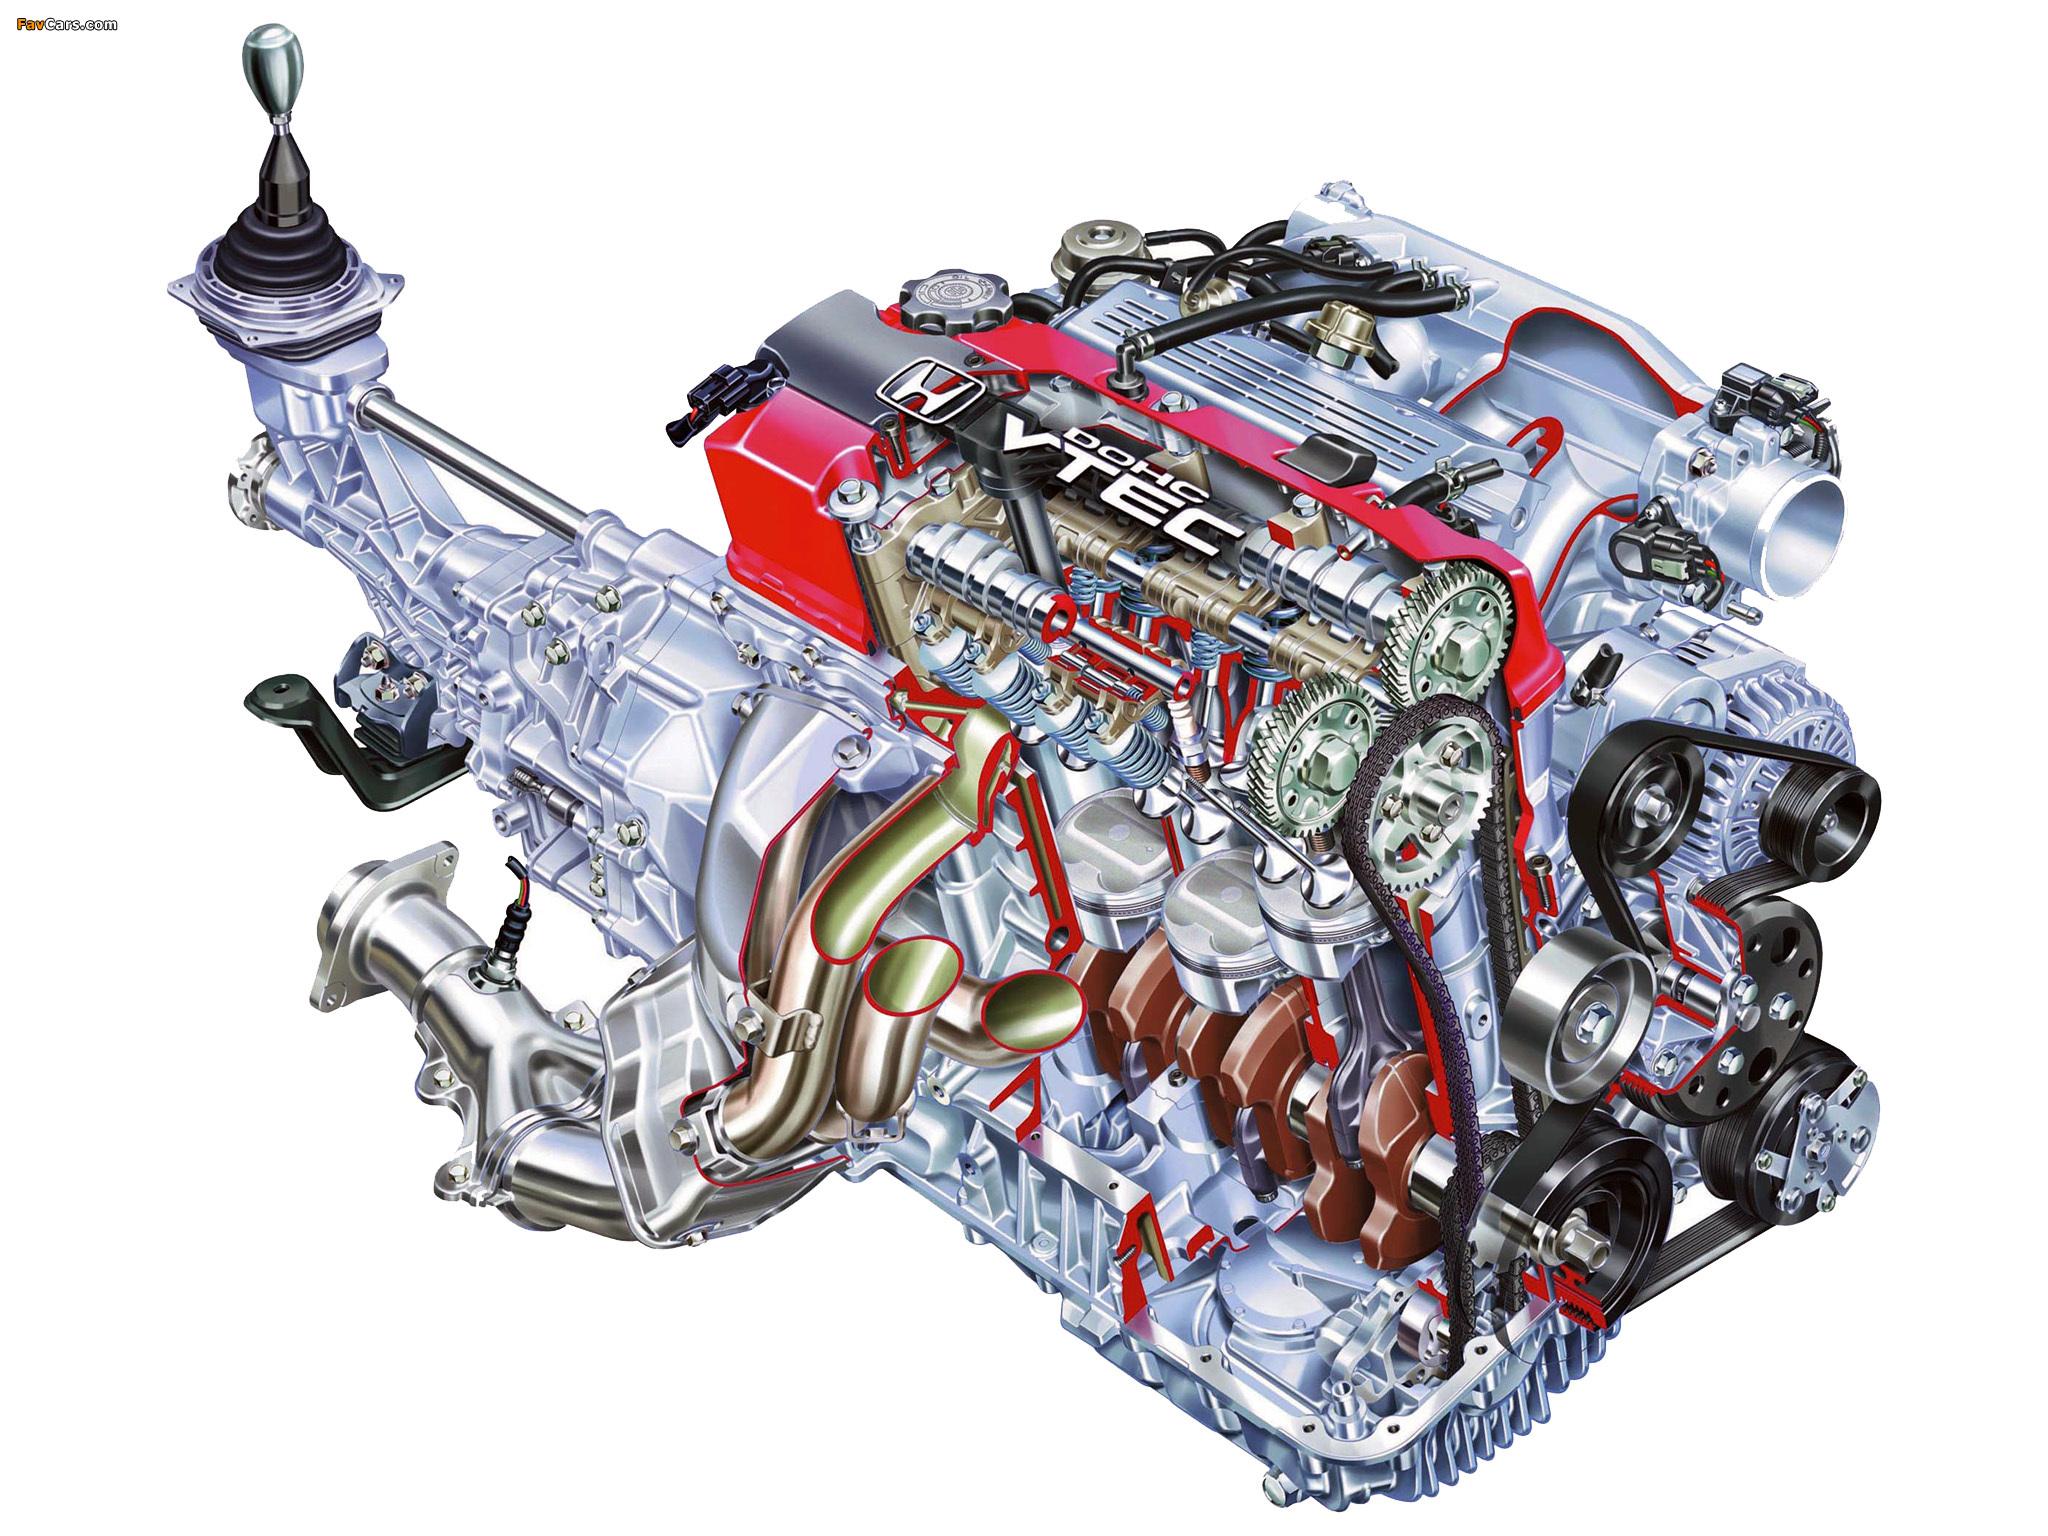 Honda v мотор. Двигатели Honda f20c. Honda s2000 мотор. Honda s2000 двигатель f20c. Двигатель f20c Хонда.